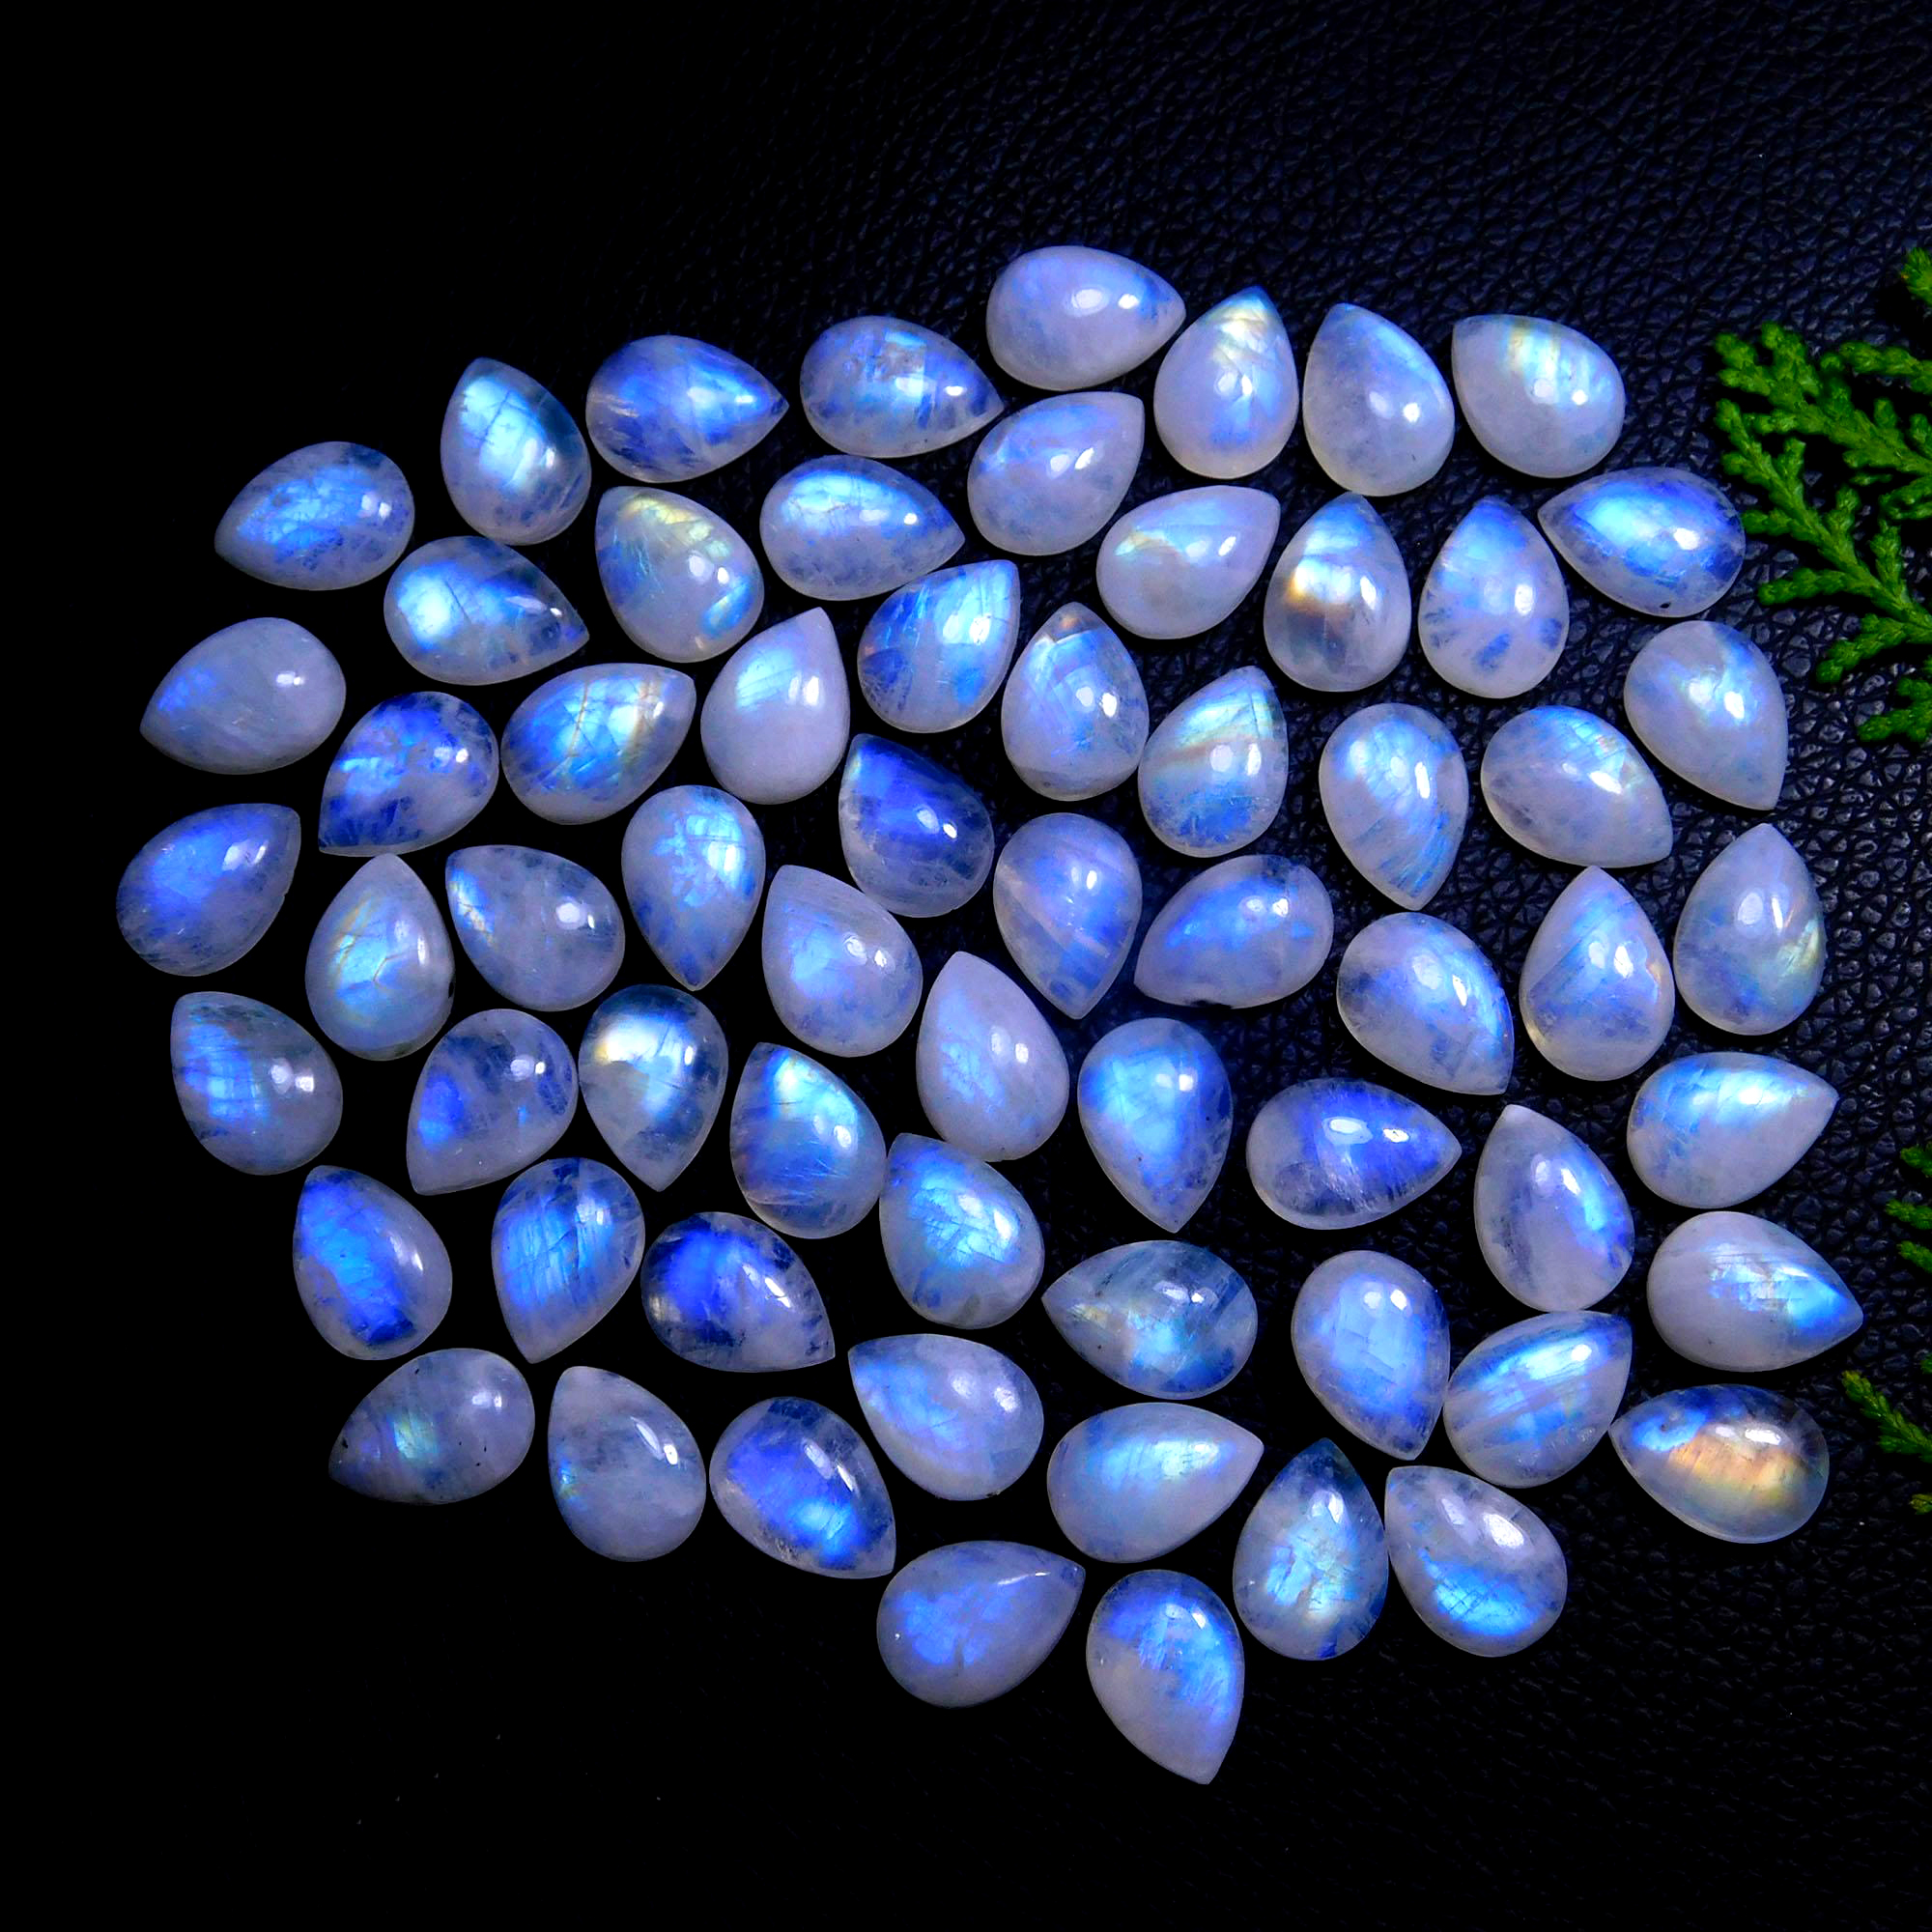 64Pcs 355Cts Natural Rainbow Moonstone Pear Shape Blue Fire Cabochon Lot Semi Precious Loose Gemstone Jewelry Supplies Crystal 14X10mm #9875